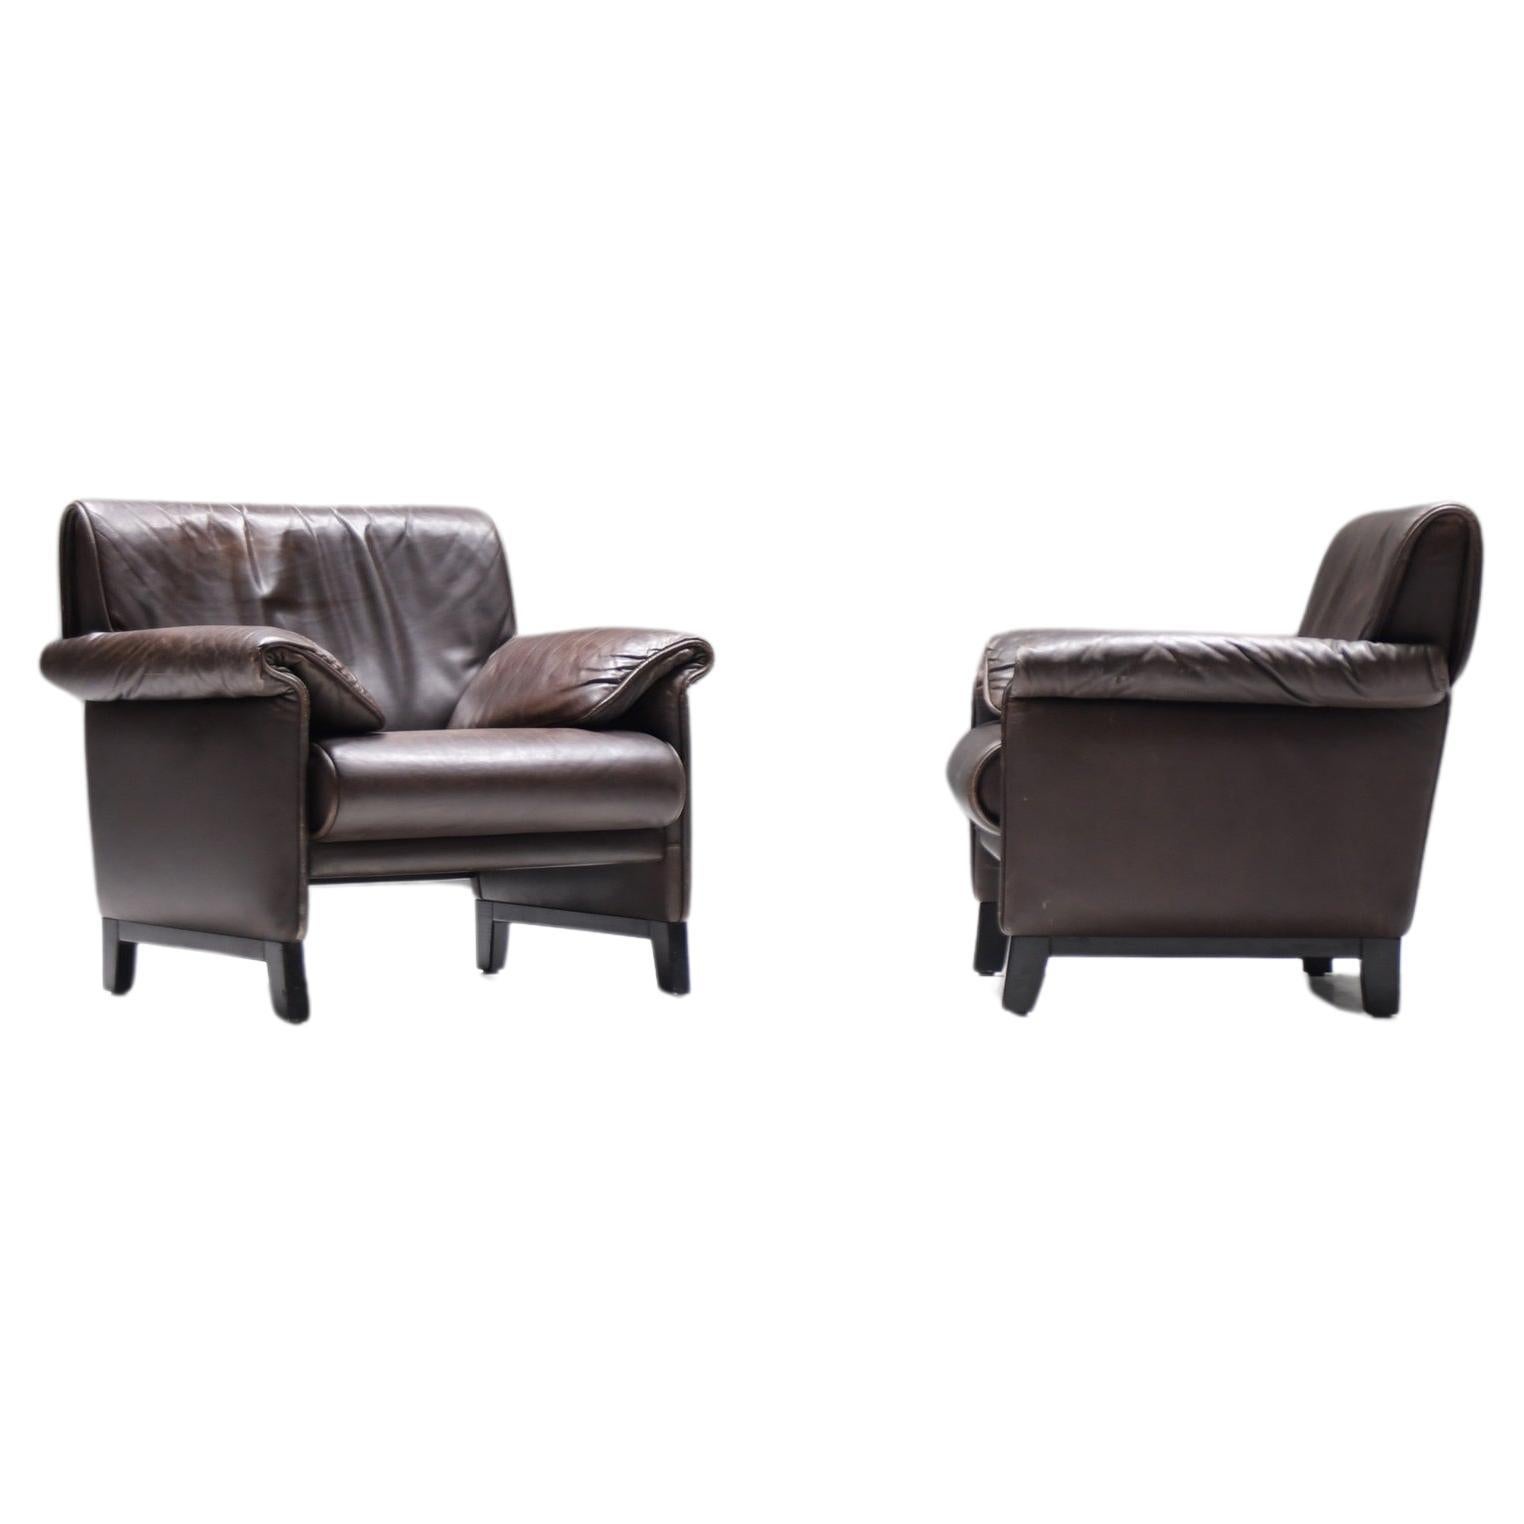 Vintage DS-14 chairs in dark brown leather by Team De Sede for De Sede